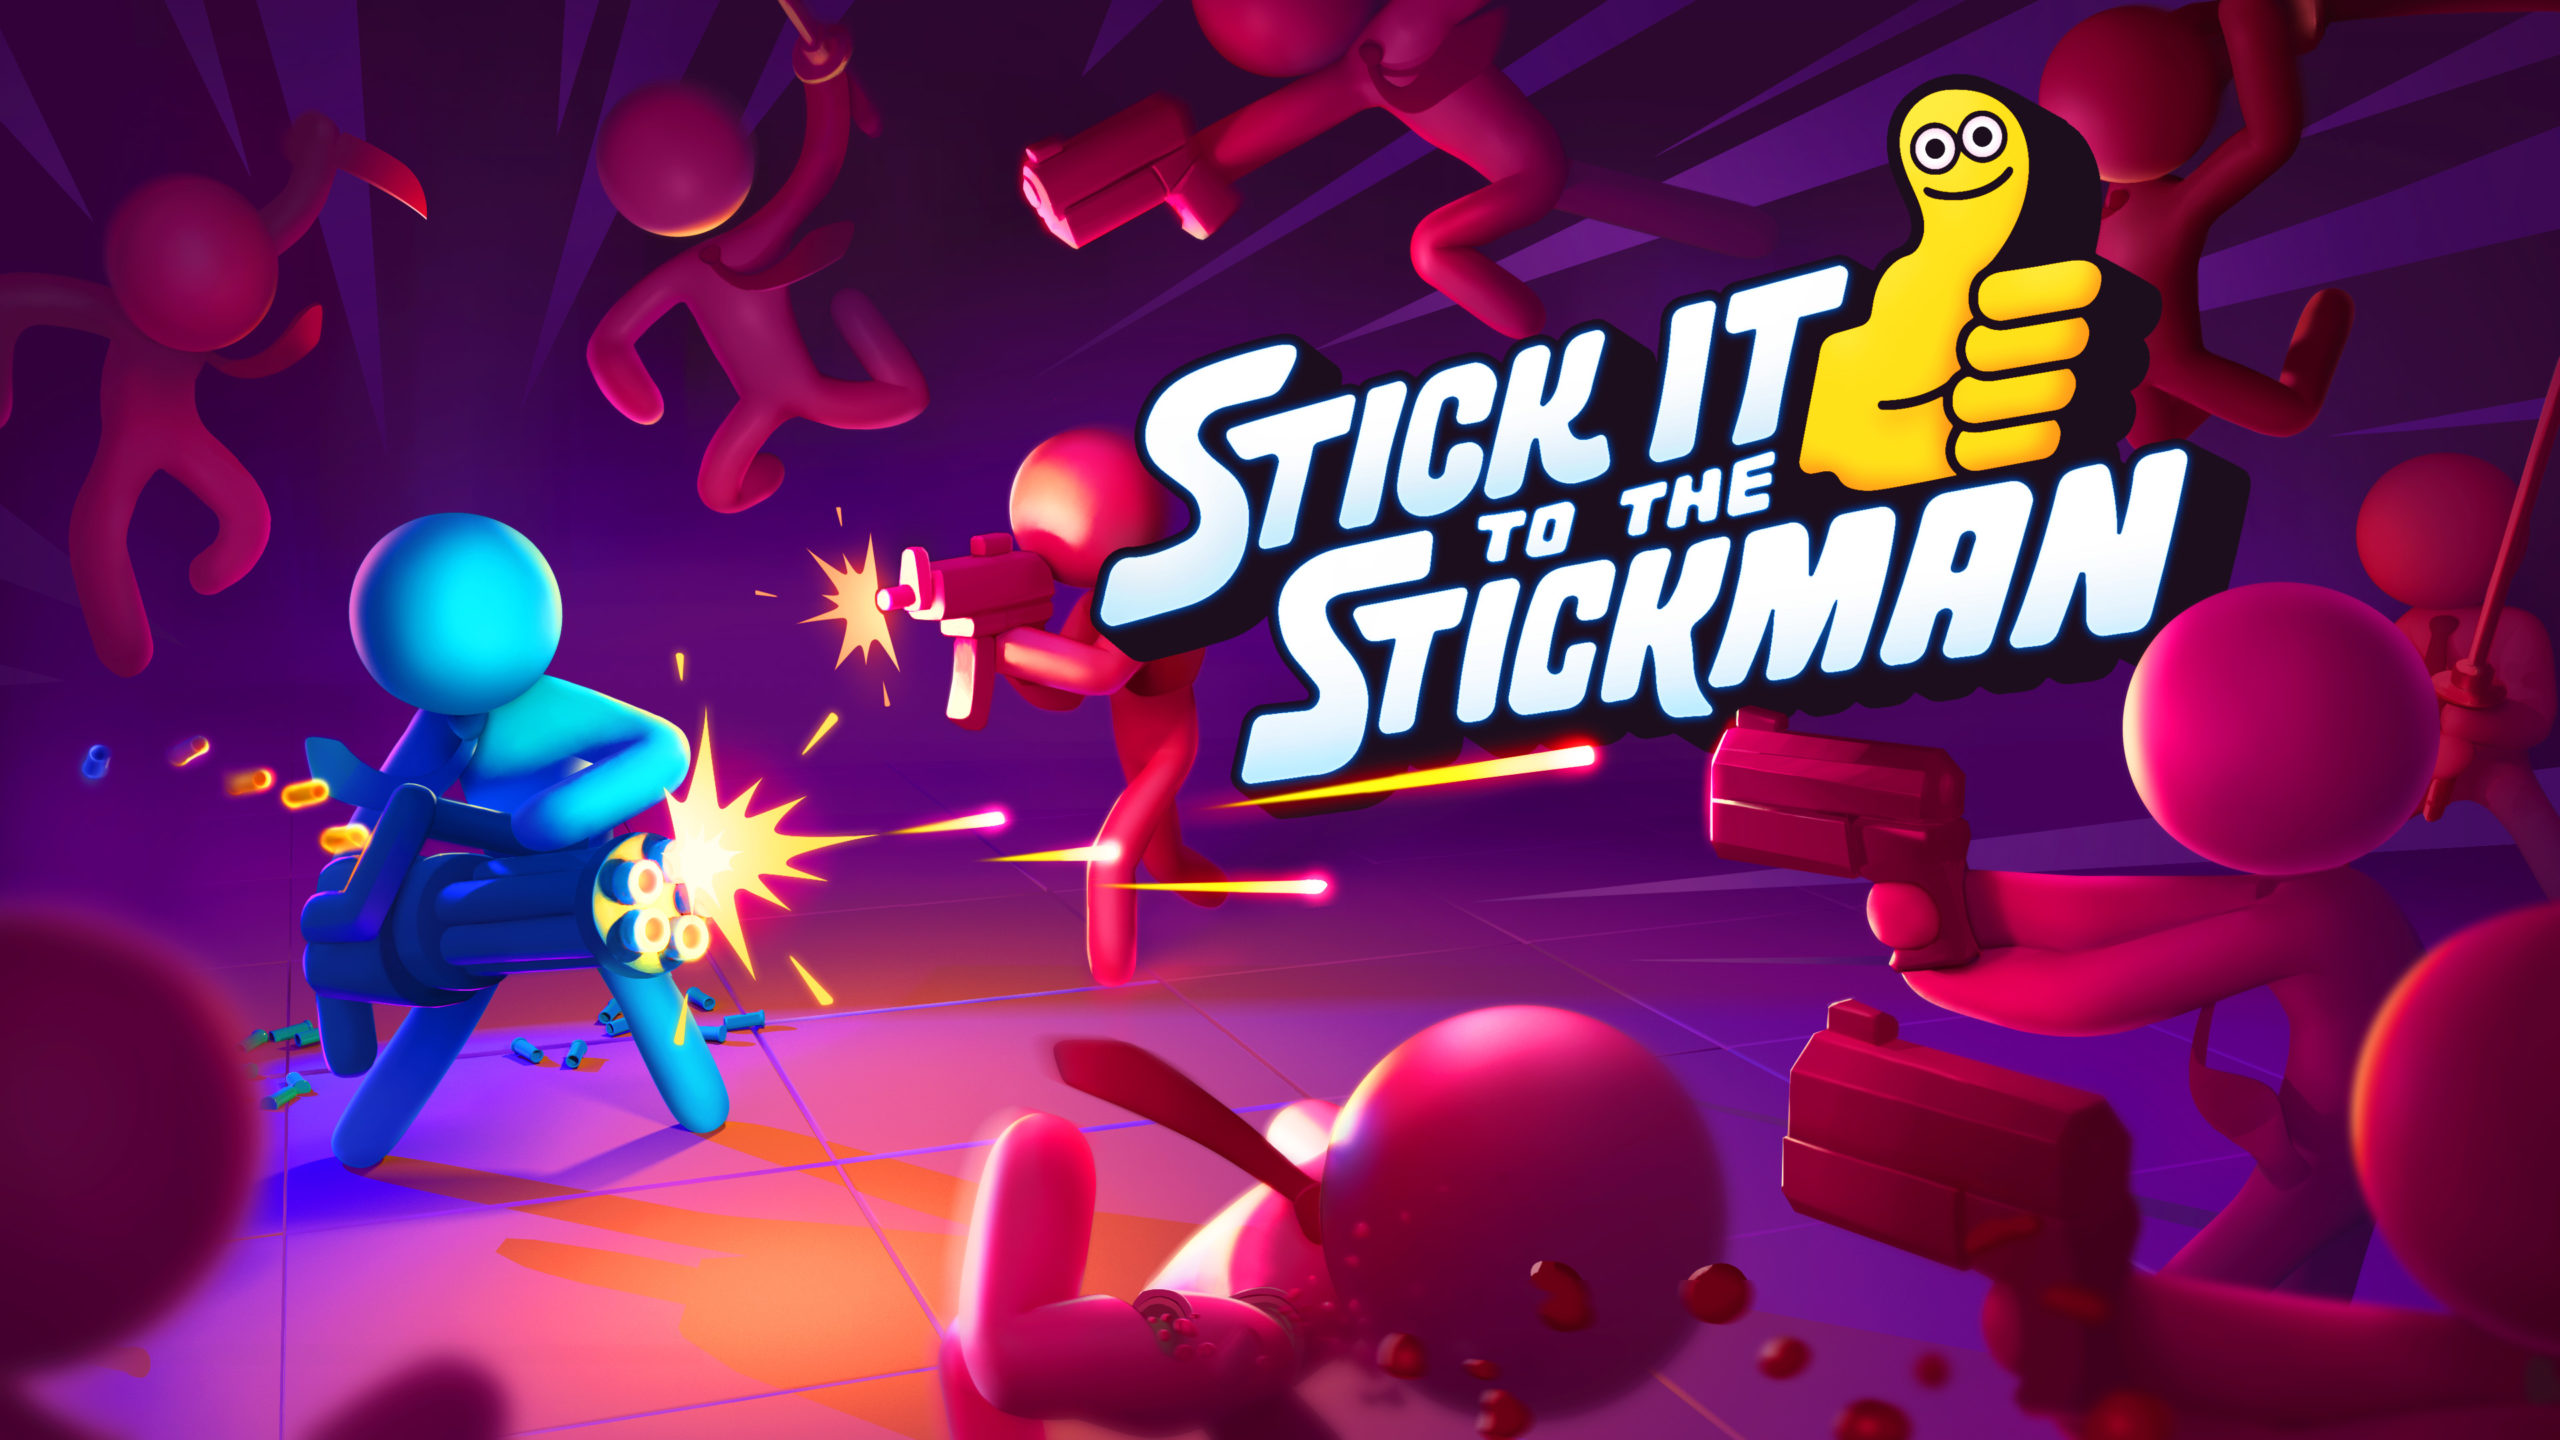 Game стики. Stick it to the Stick man. Stick to the Stickman. Игра Stick it to the man. Stick it the Stickman.